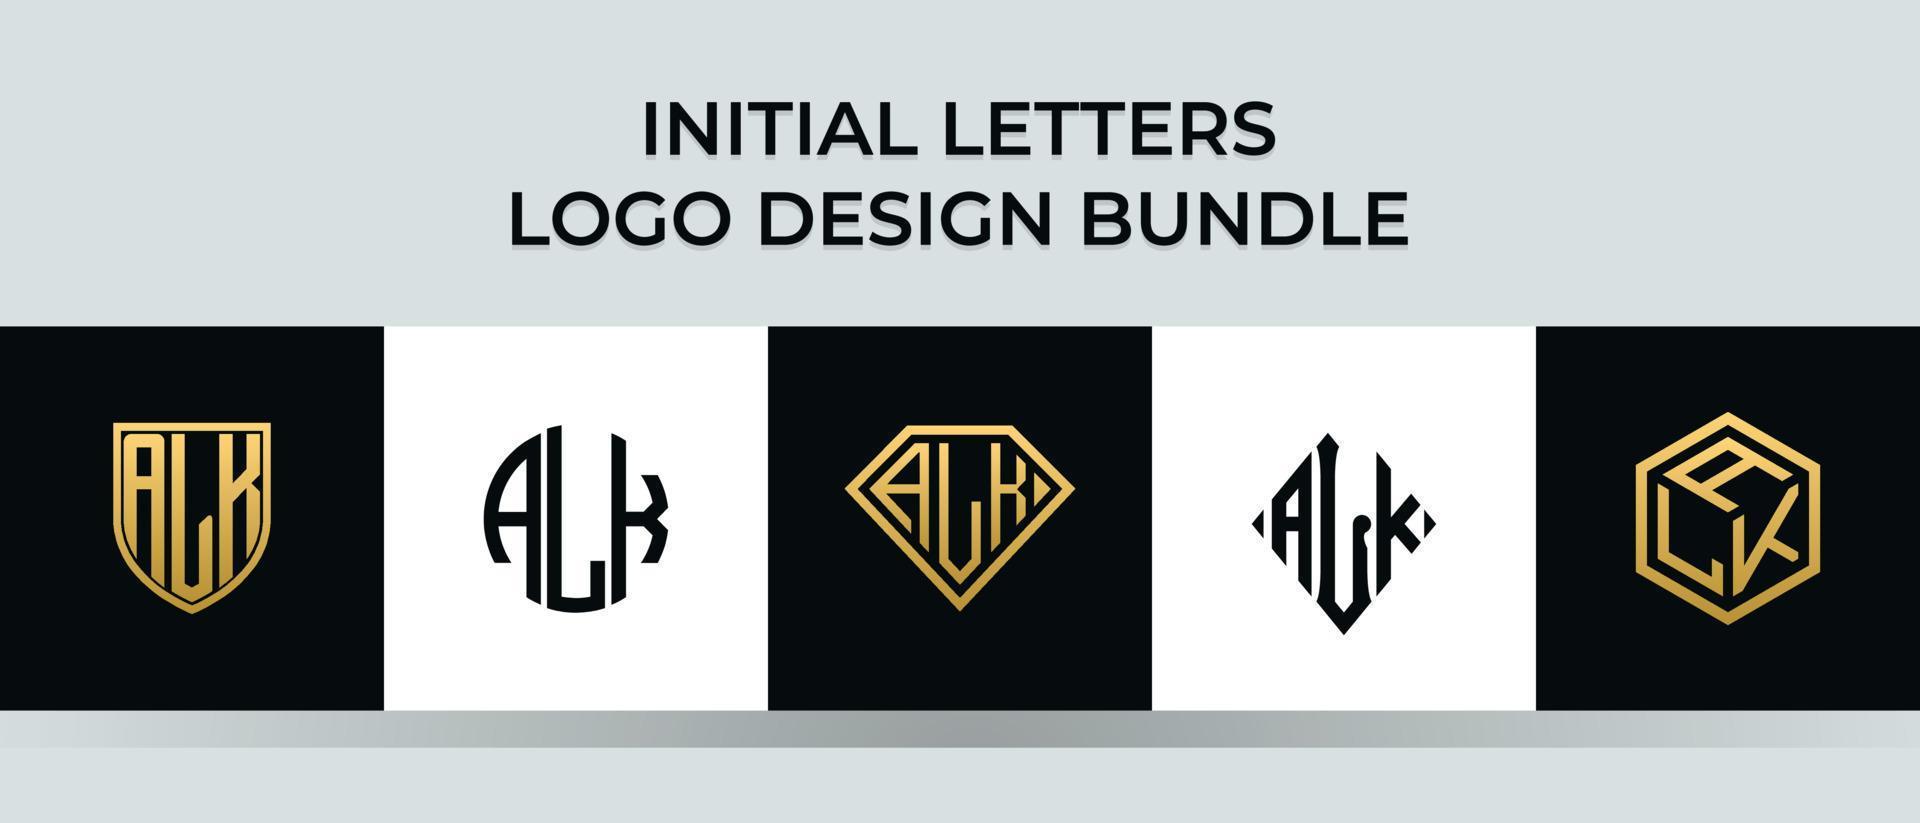 Anfangsbuchstaben alk Logo Designs Bundle vektor